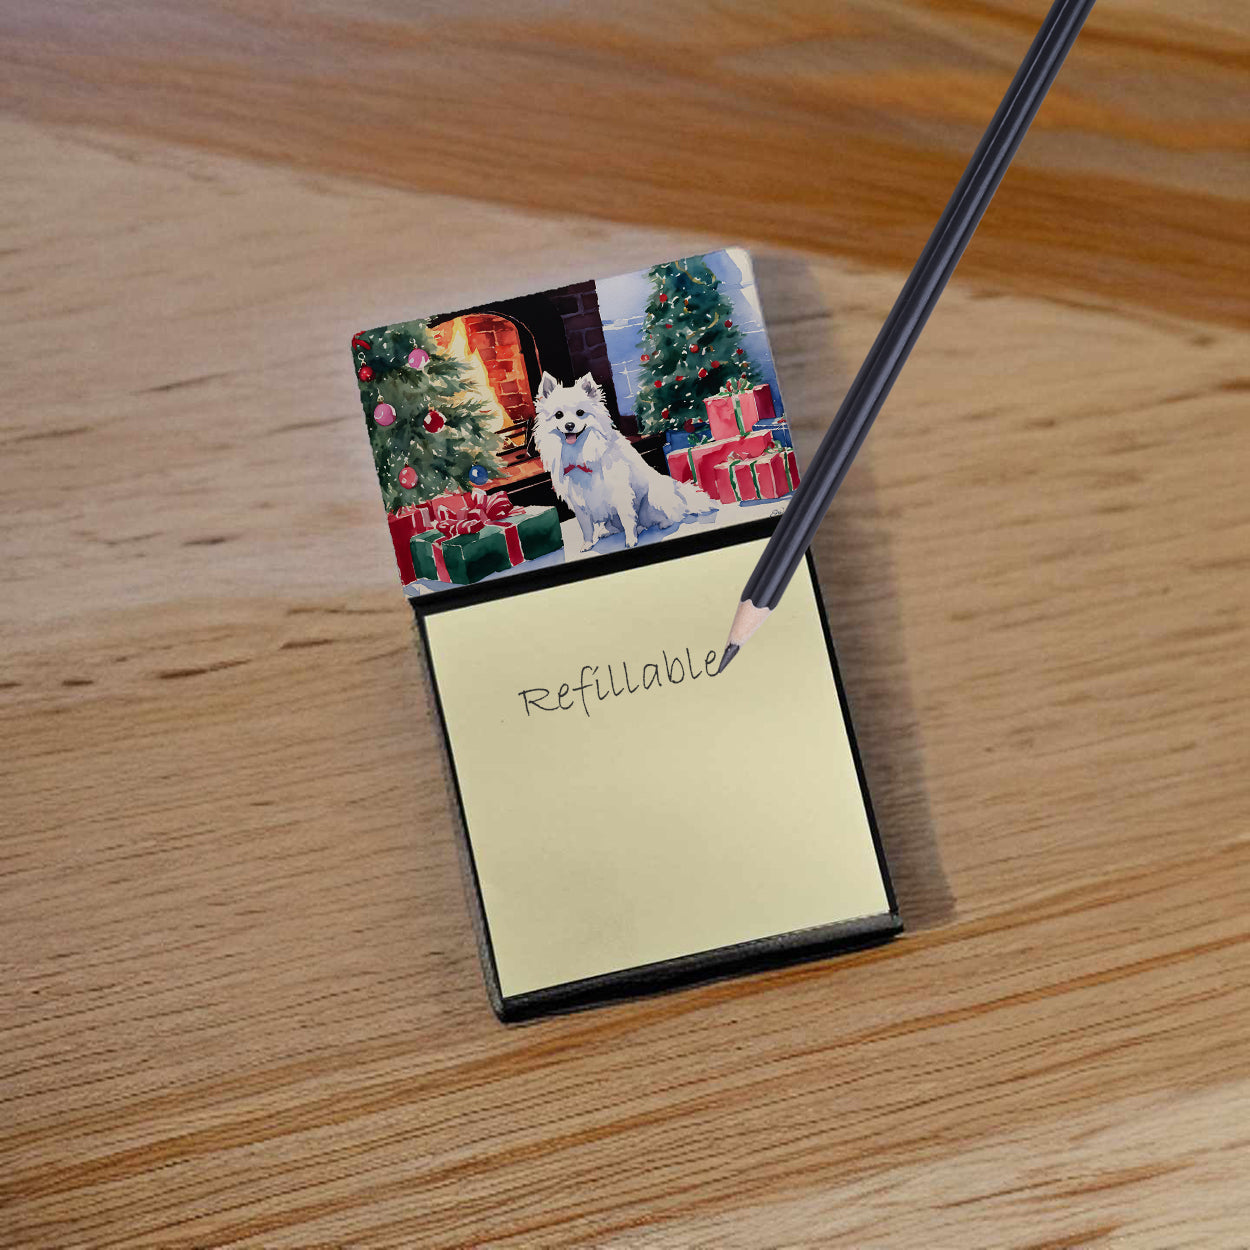 Buy this Japanese Spitz Cozy Christmas Sticky Note Holder